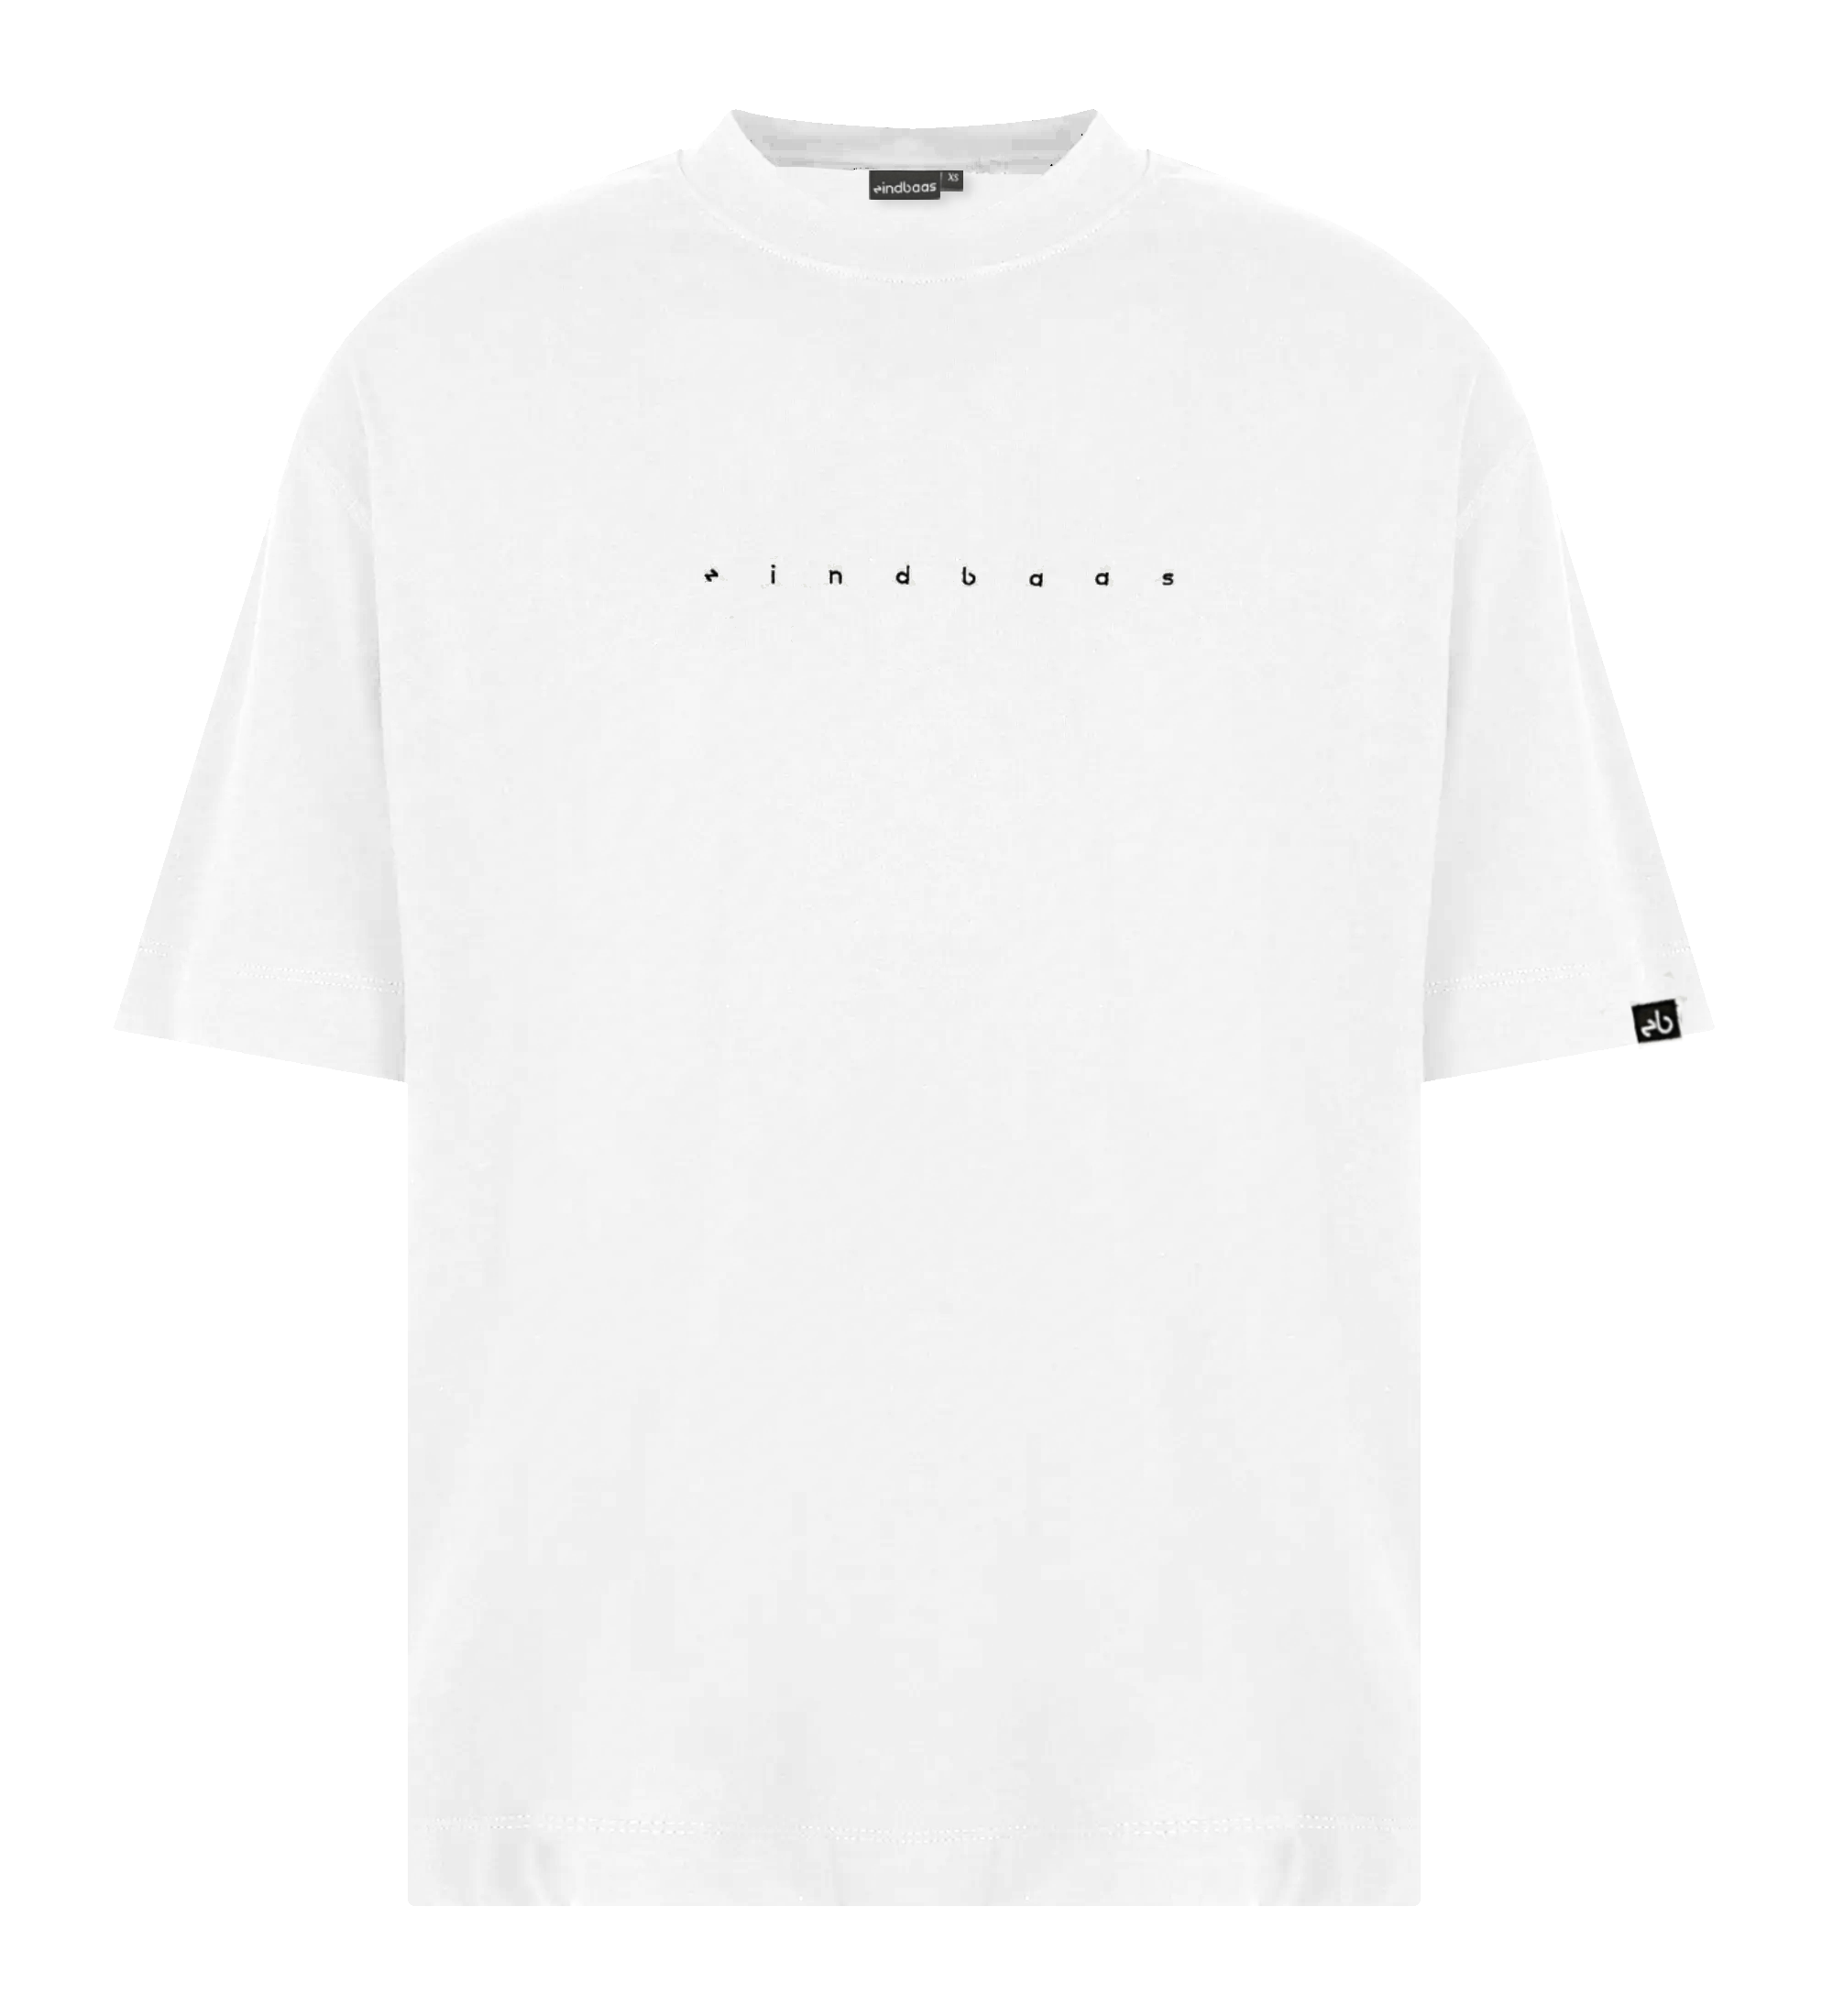 Oversized T-Shirt - eindbaas - White/Black - Heavyweight